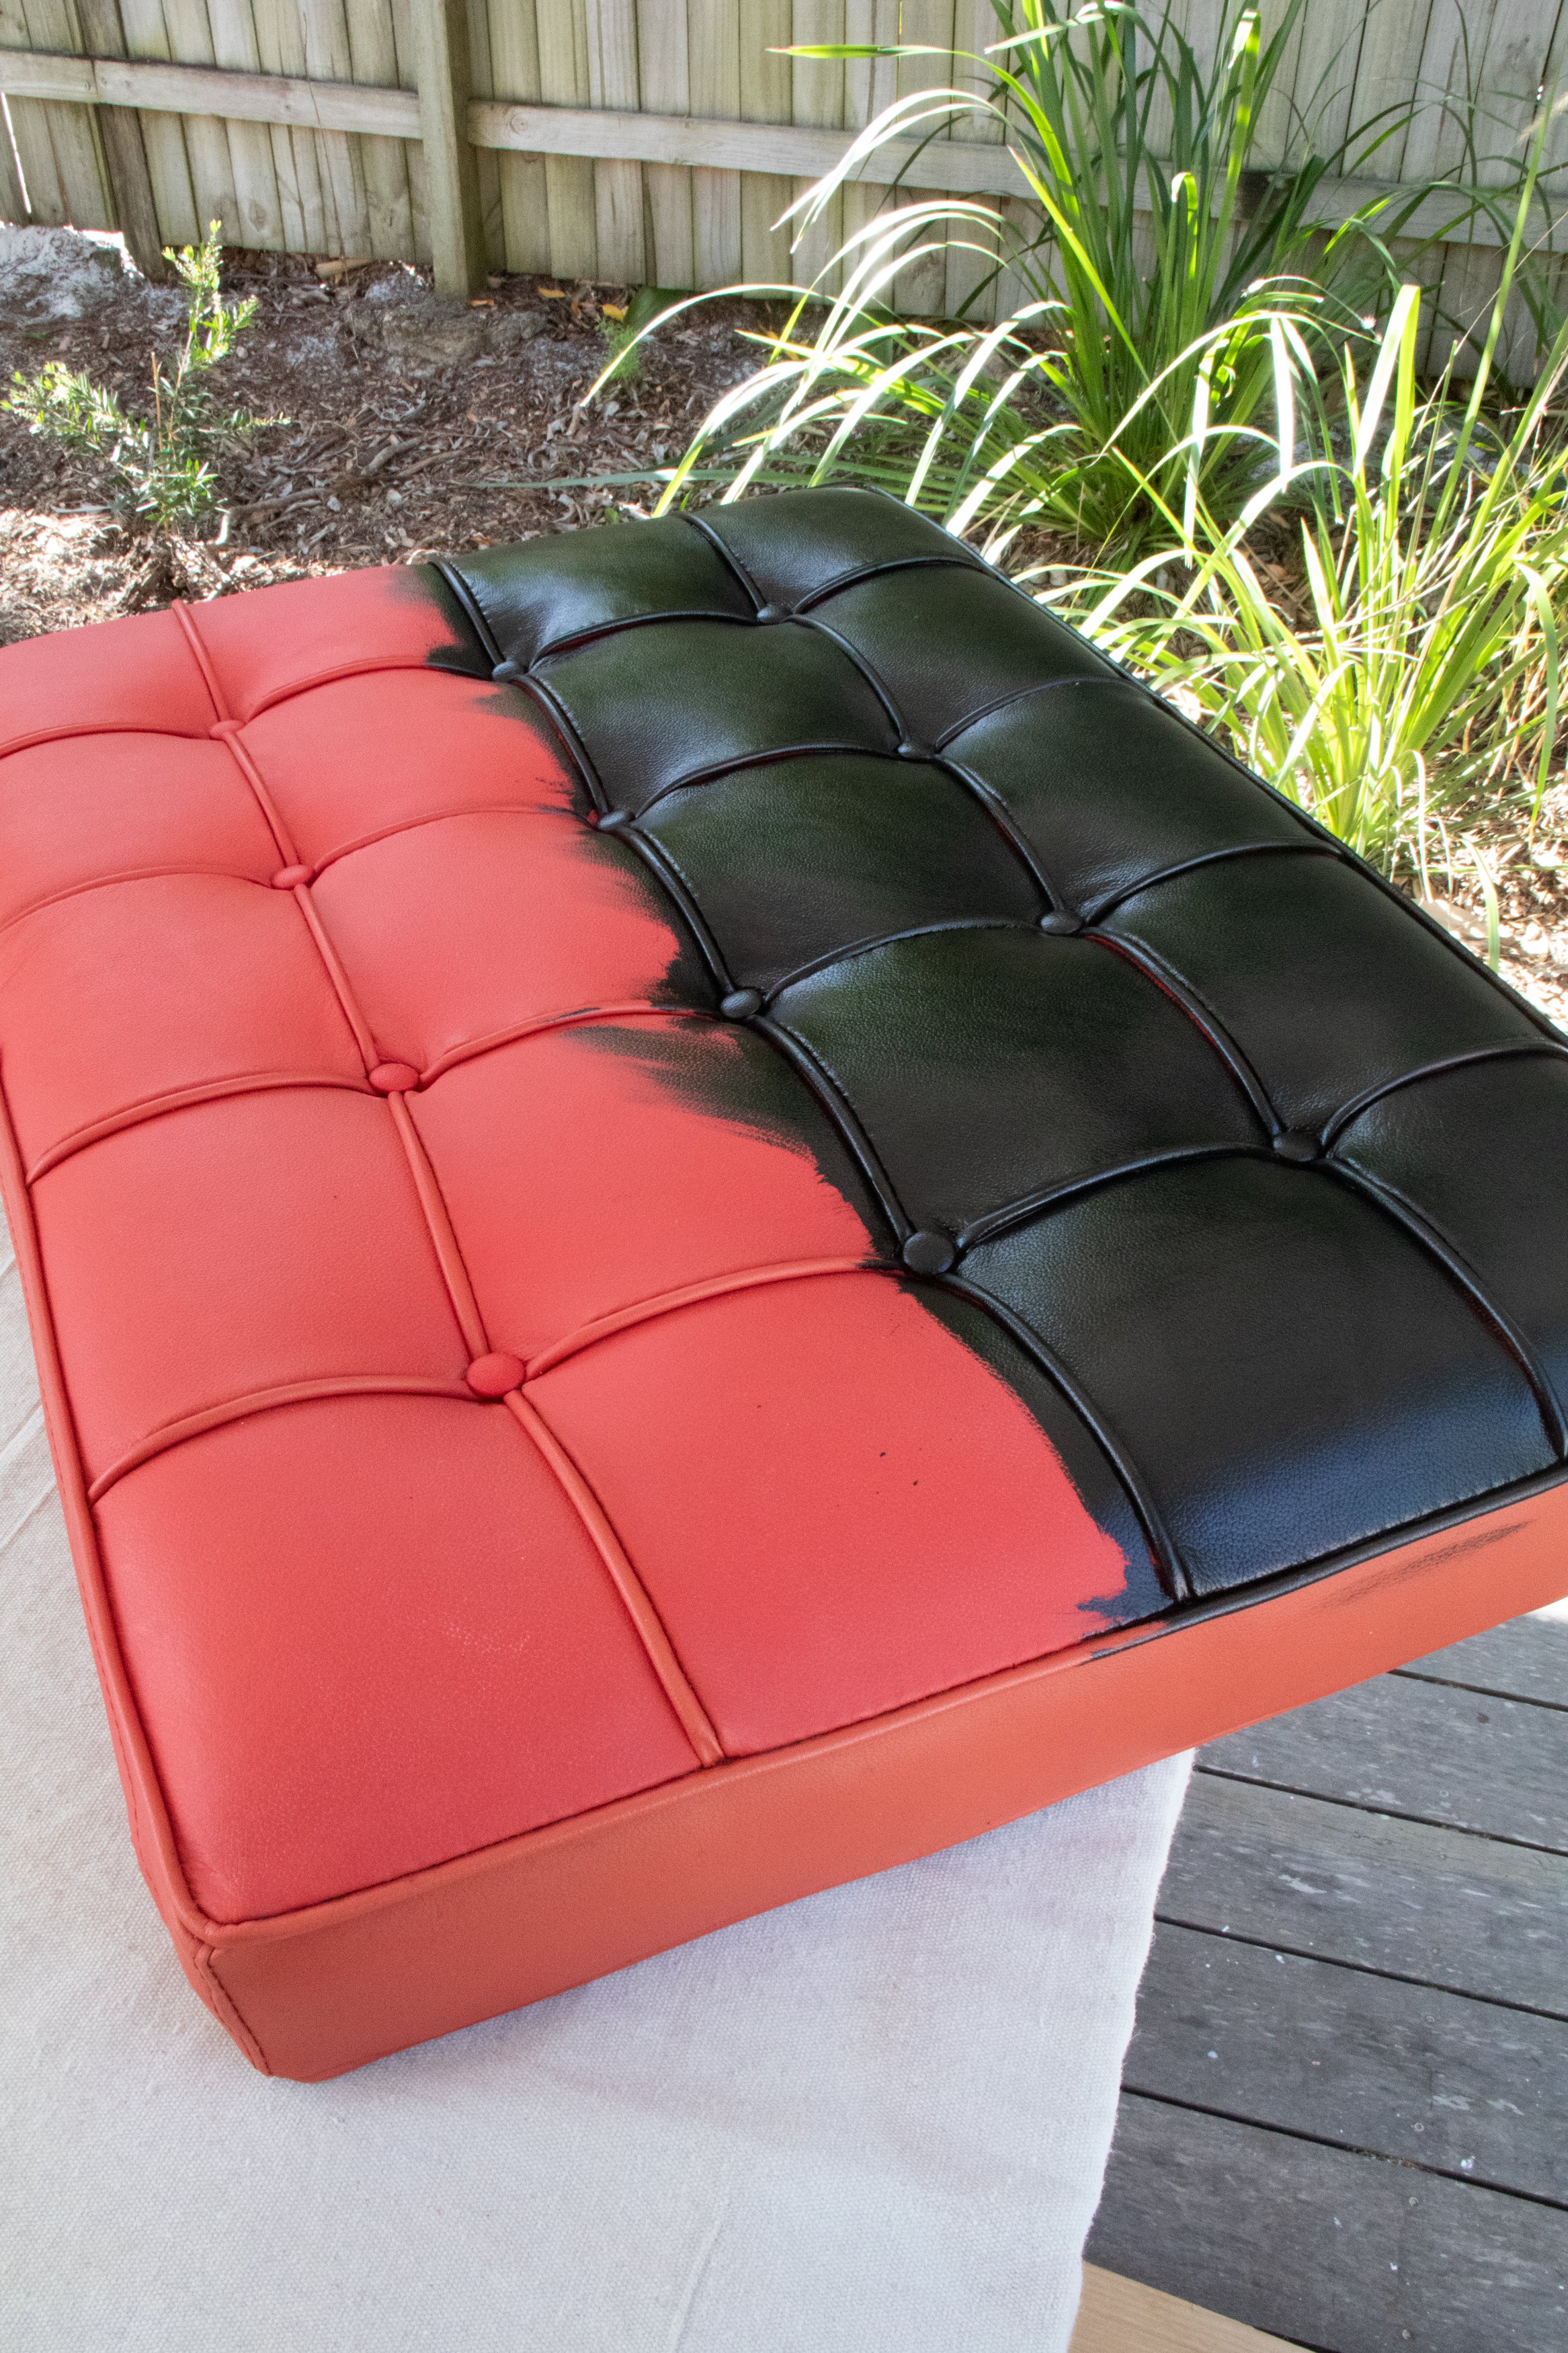 Chrome Leather Chair Restoration (8 of 54).jpg